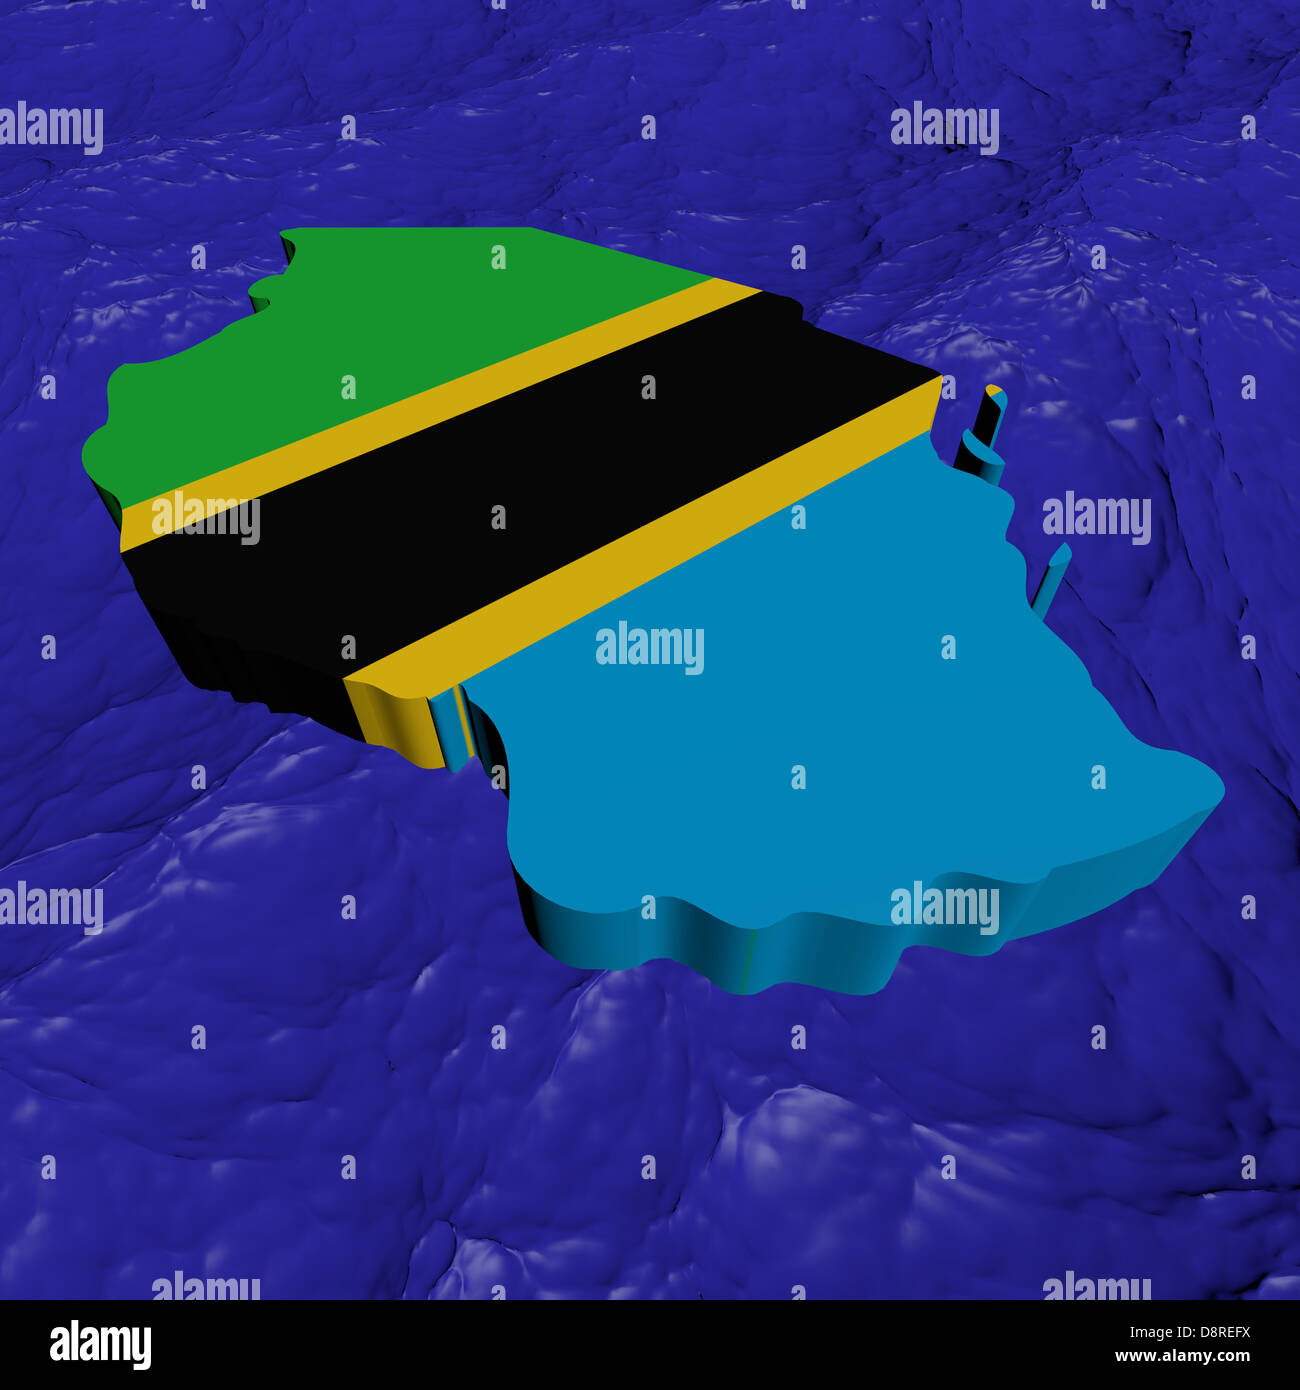 Tanzania map flag in abstract ocean illustration Stock Photo